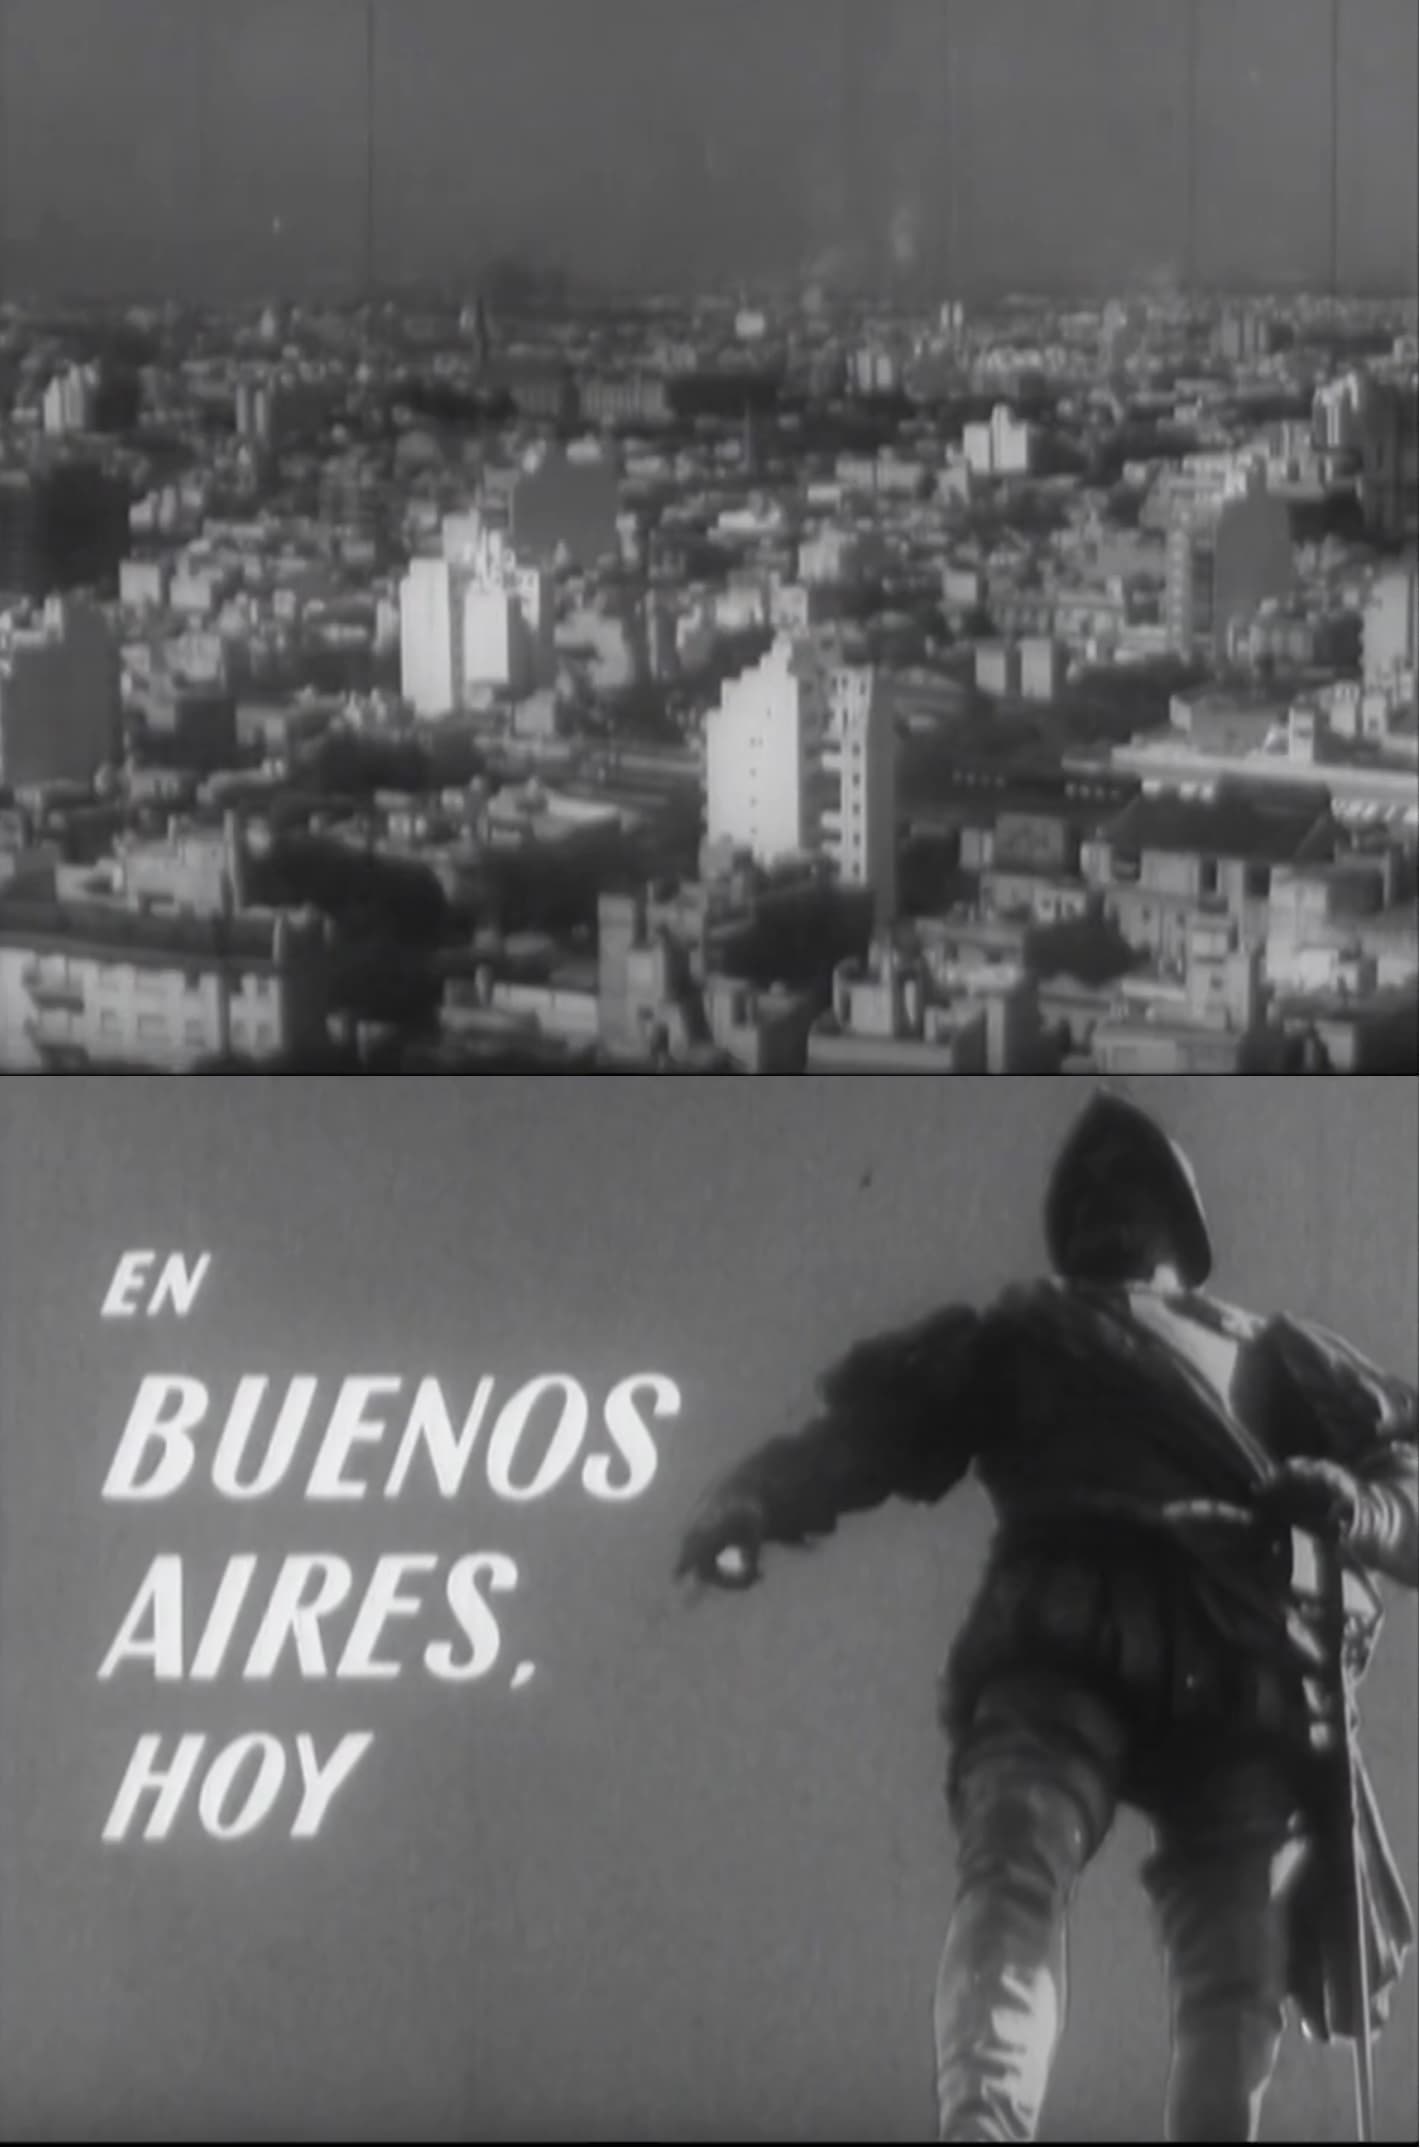 En Buenos Aires, hoy (1959)